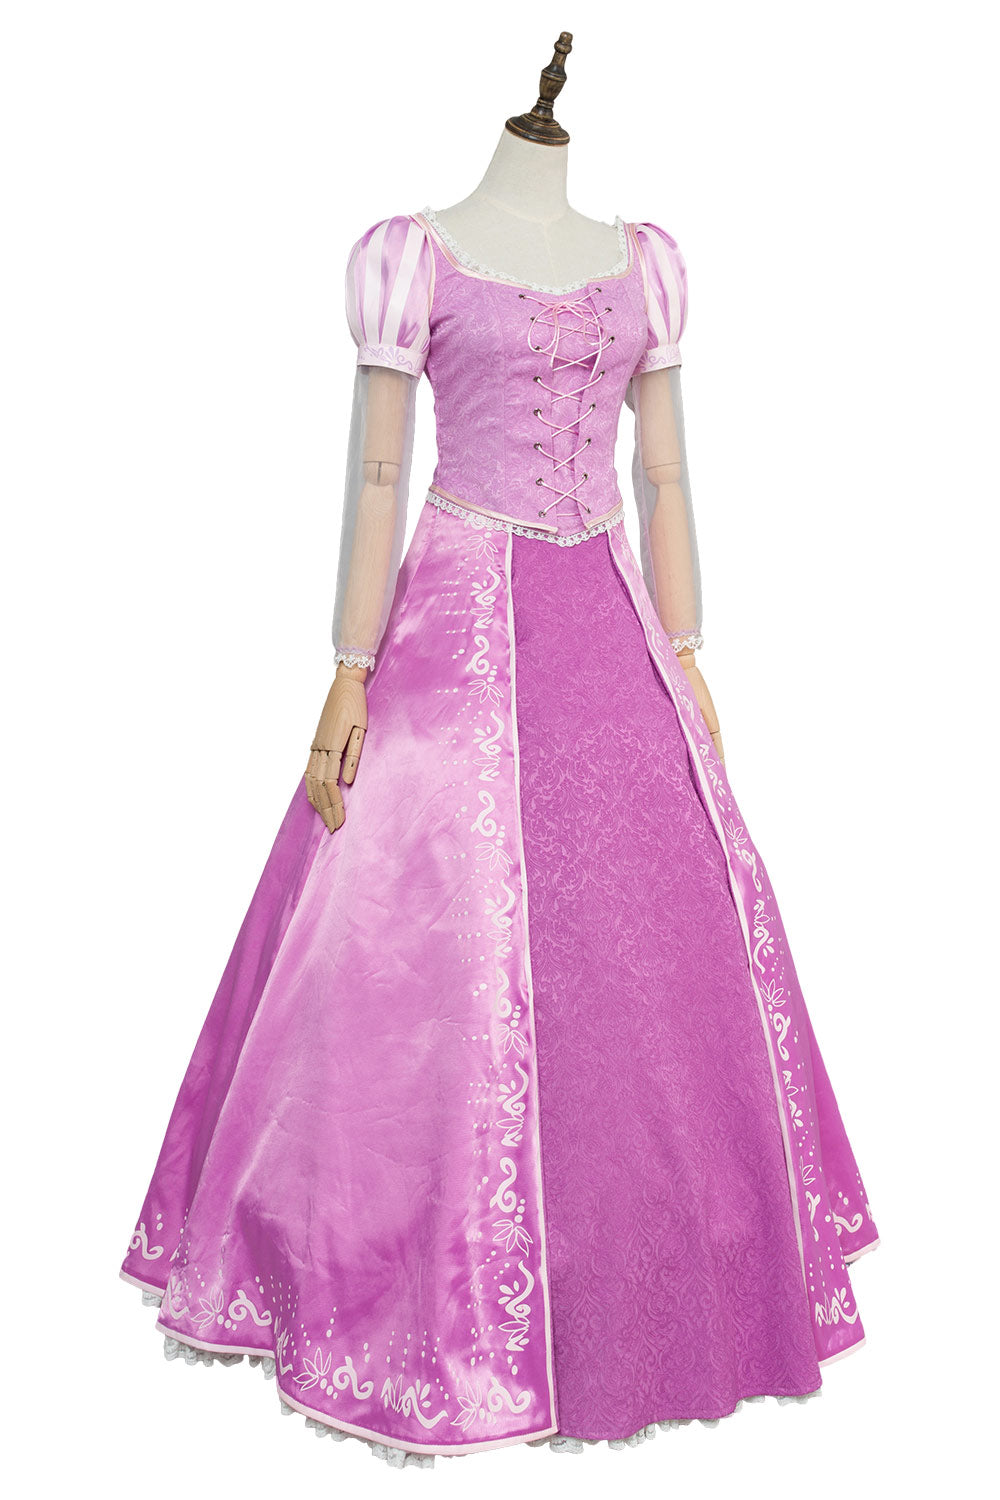 Tangled Prinzessin Rapunzel Kleid Lila Cosplay Kostüm Neu Version